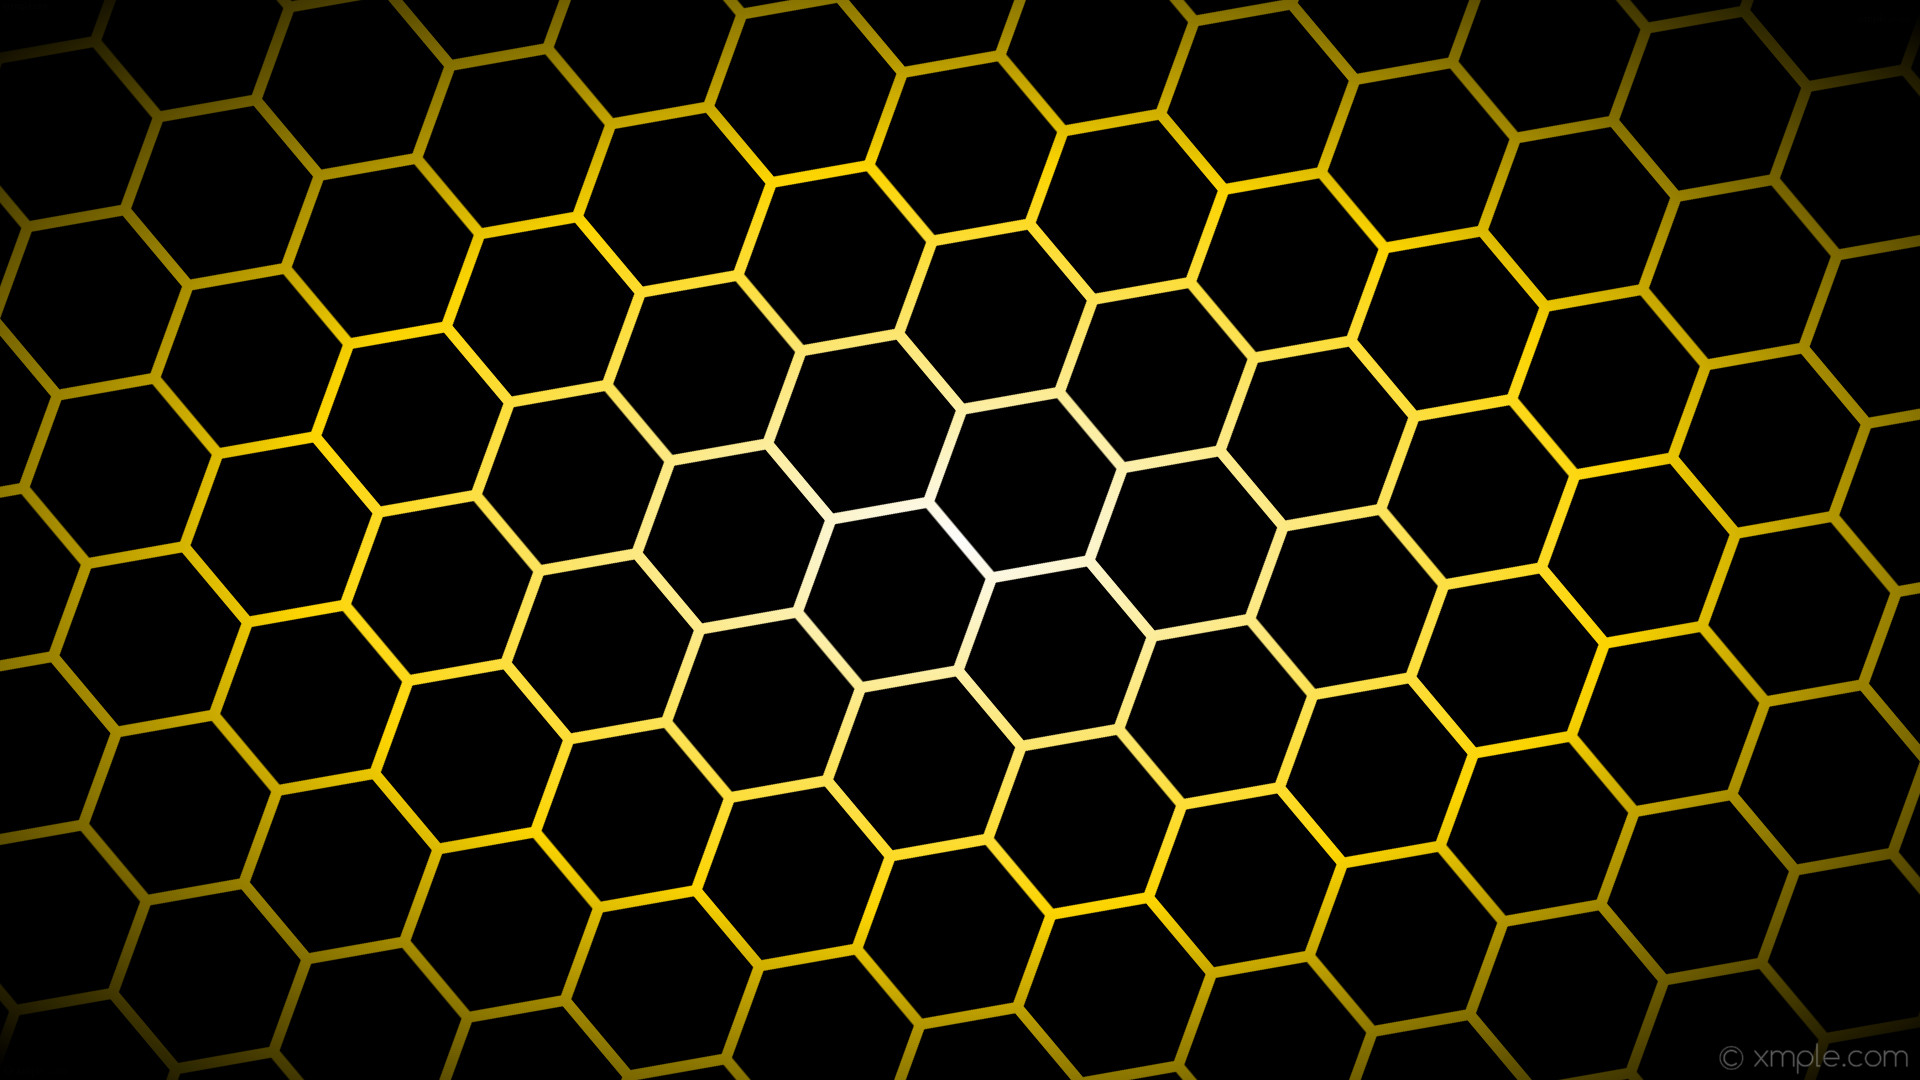 1920x1080 wallpaper yellow hexagon glow white gradient black gold #000000 #ffffff  #ffd700 diagonal 40